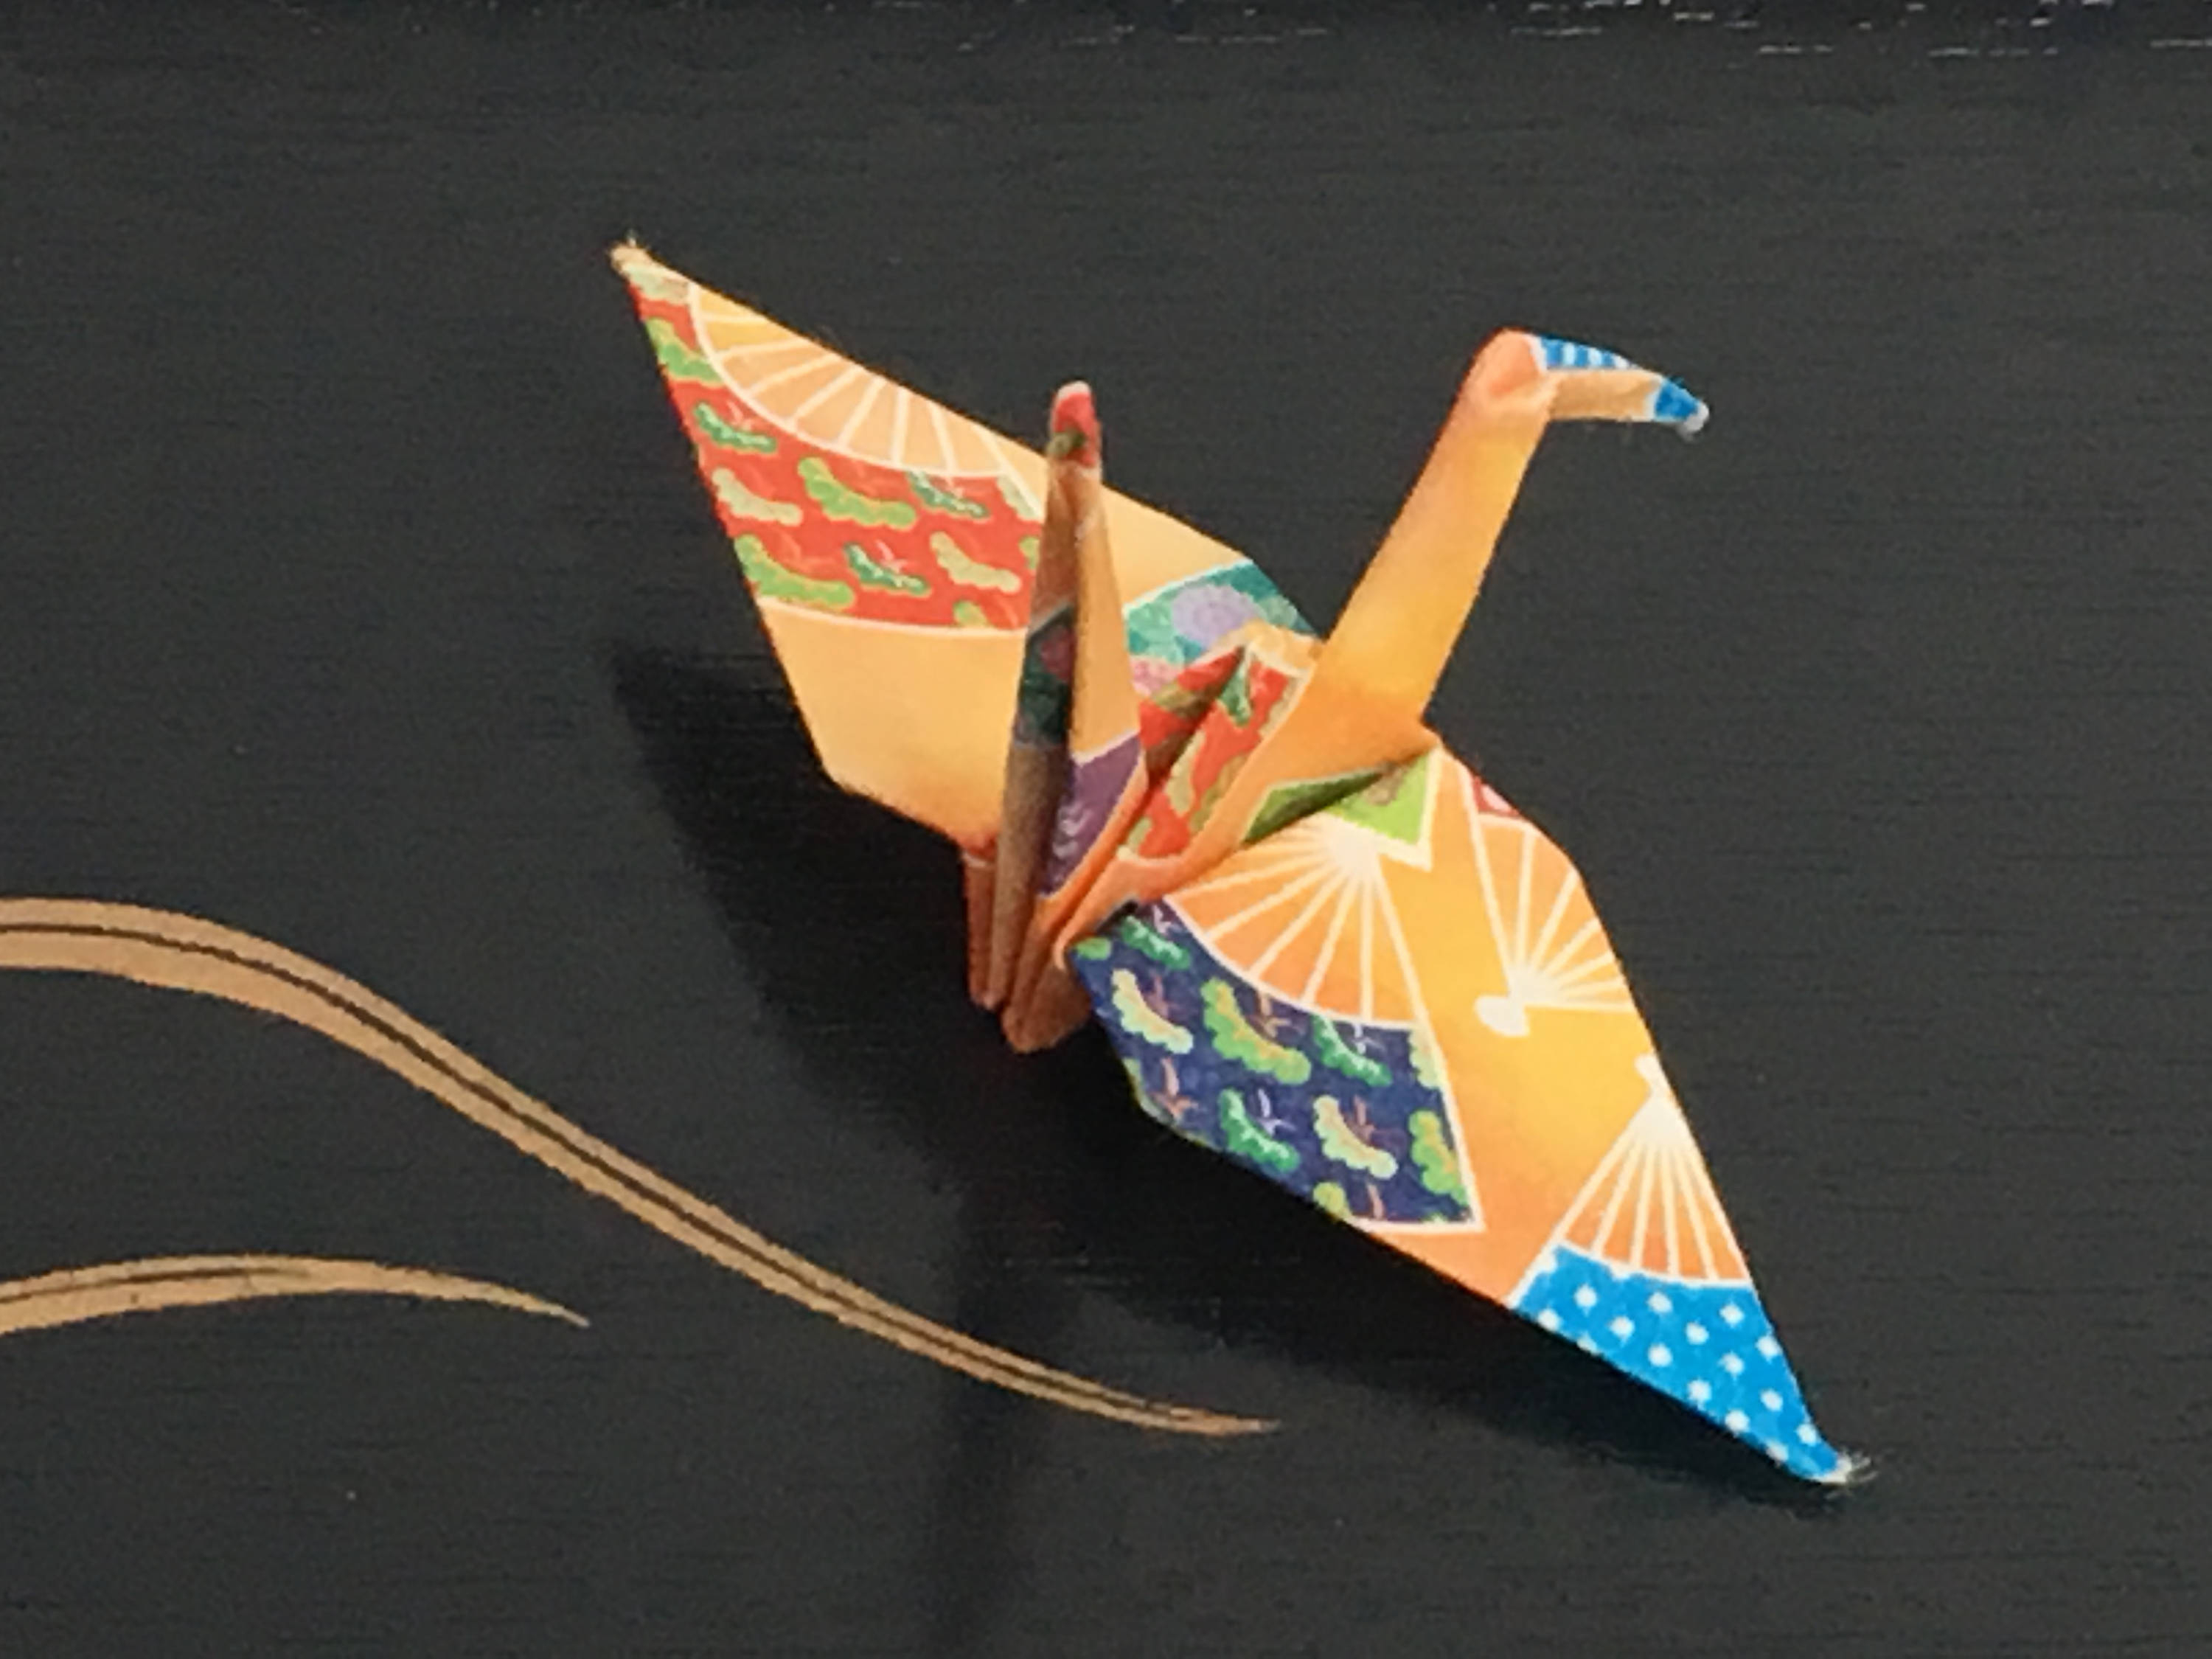 Ten Pound Note Origami Origami Paper Cranes 10 Japanese Chiyogami Paper Cranes With Japanese Fan Kimono Patterns